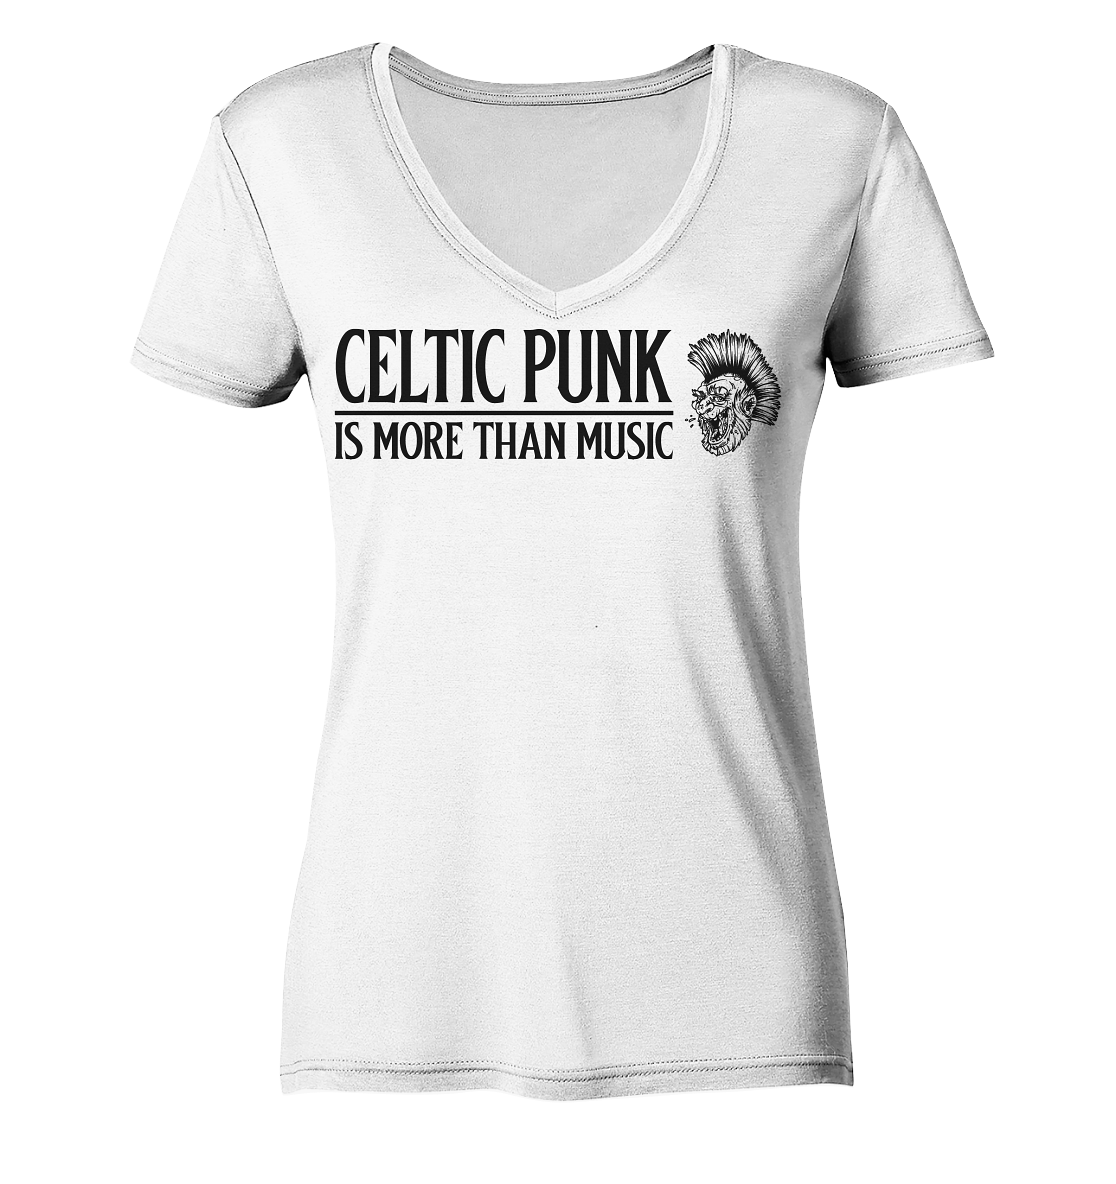 Celtic Punk "Is More Than Music" - Ladies V-Neck Shirt